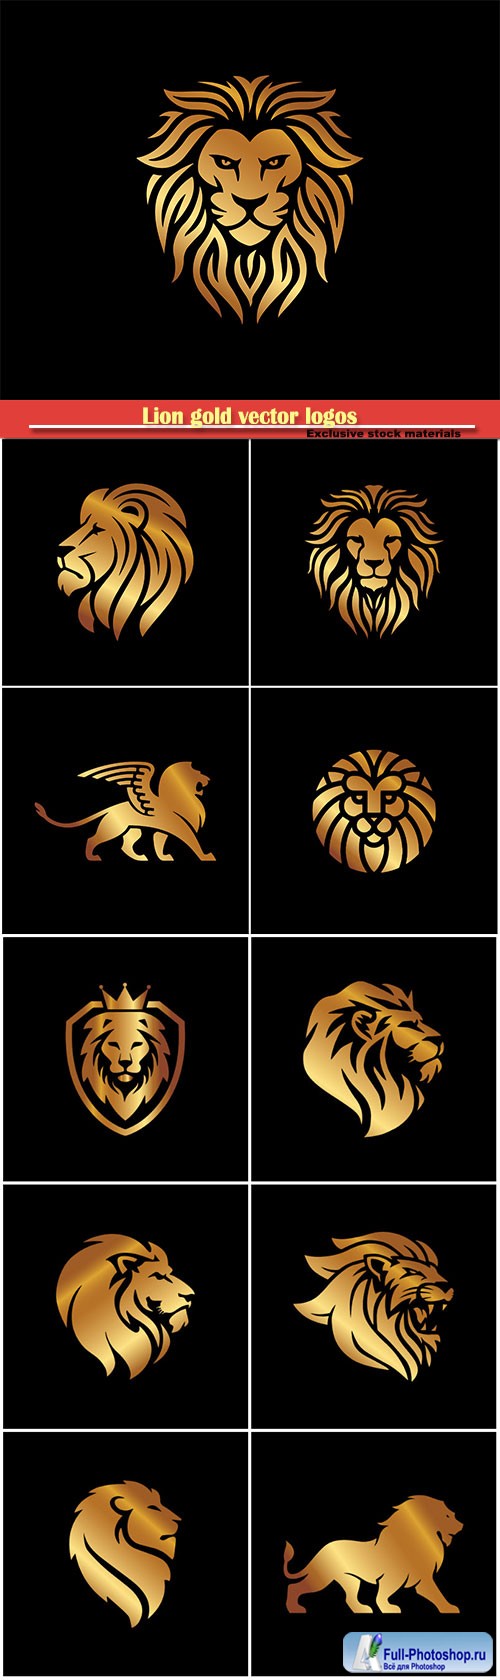 Lion gold vector logos on black background